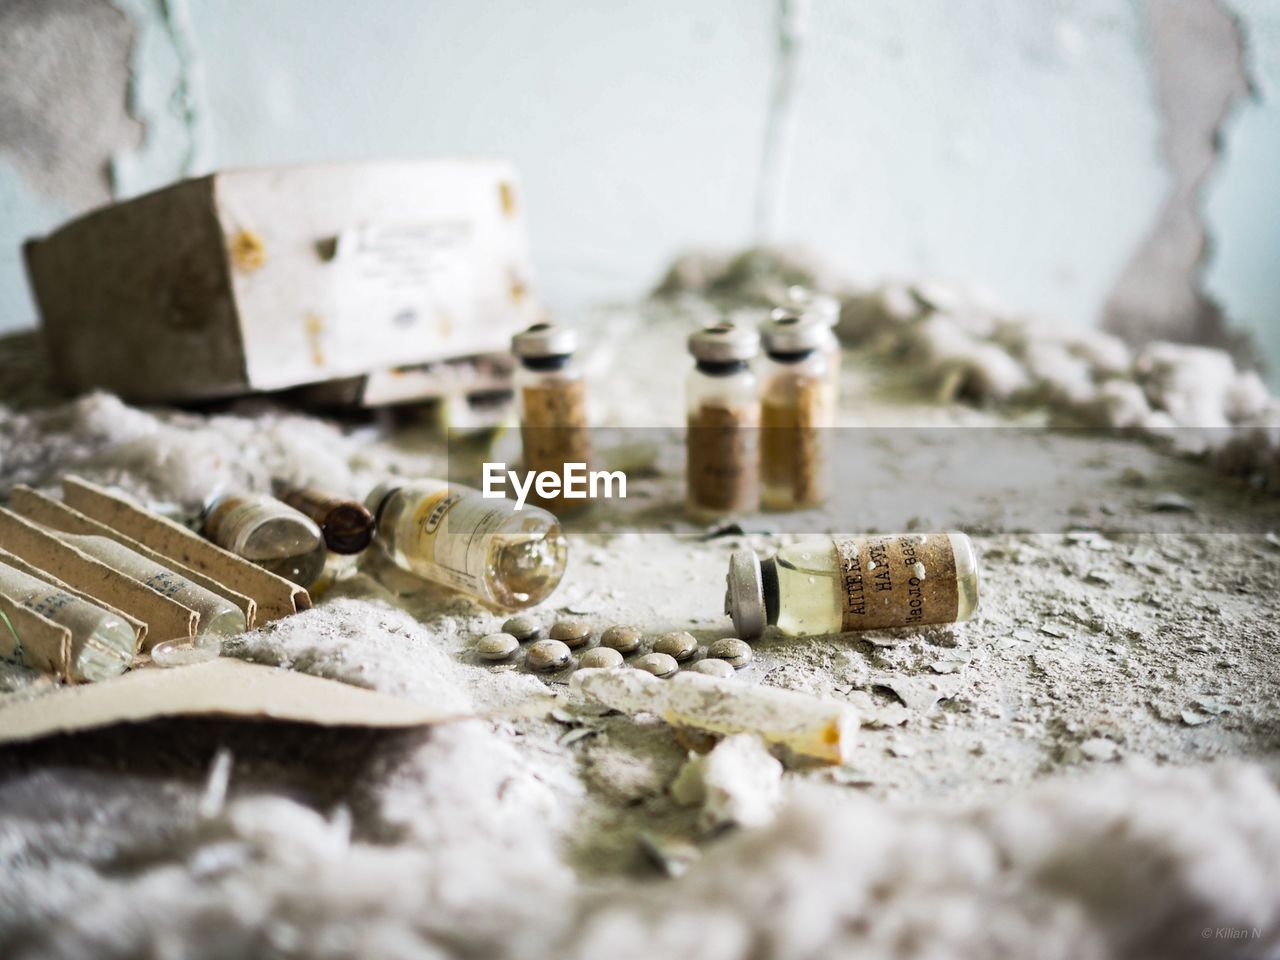 Close-up of abandoned medicines in bottles